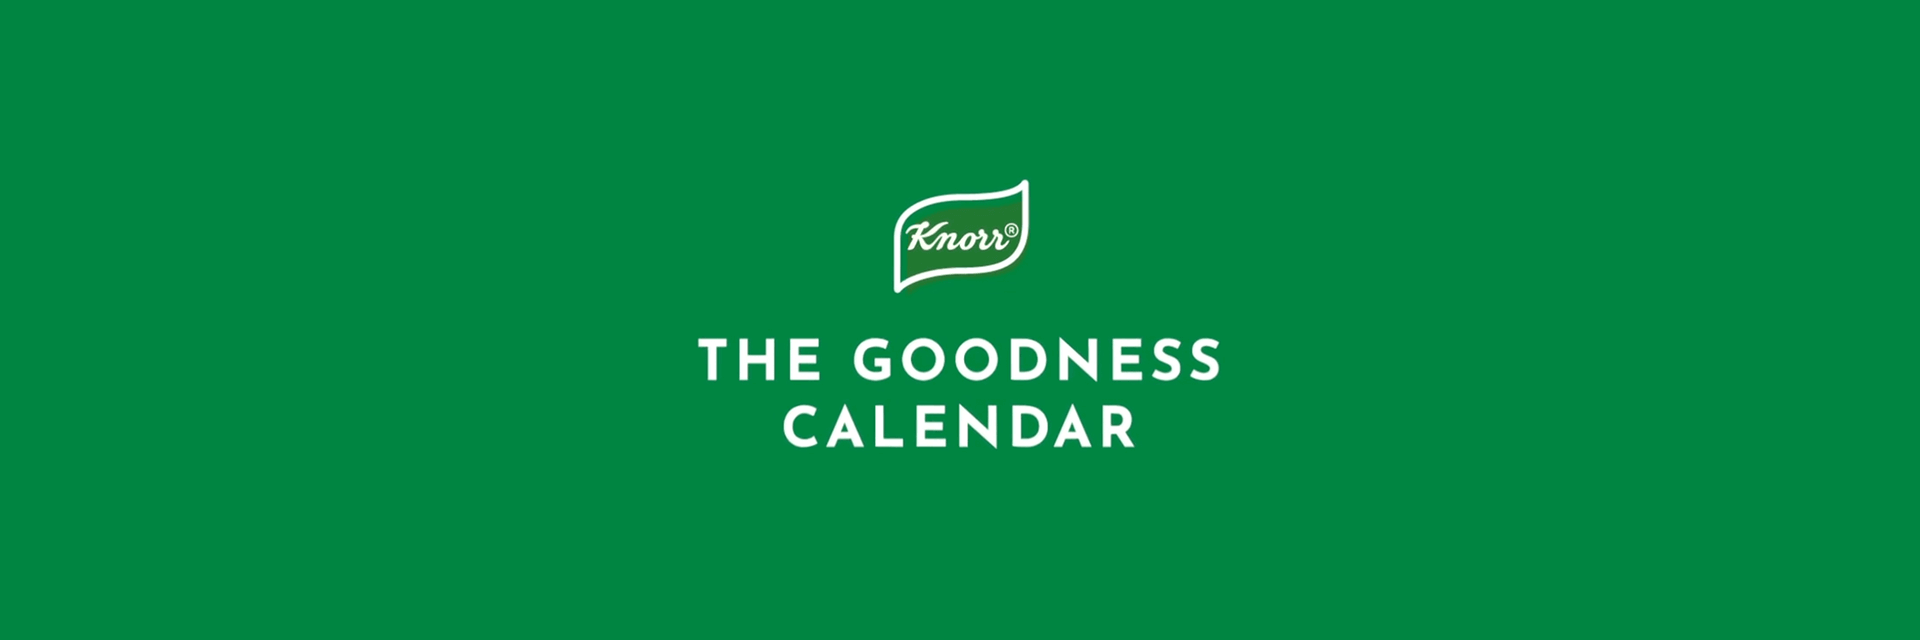 Knorr - Goodness Calendar